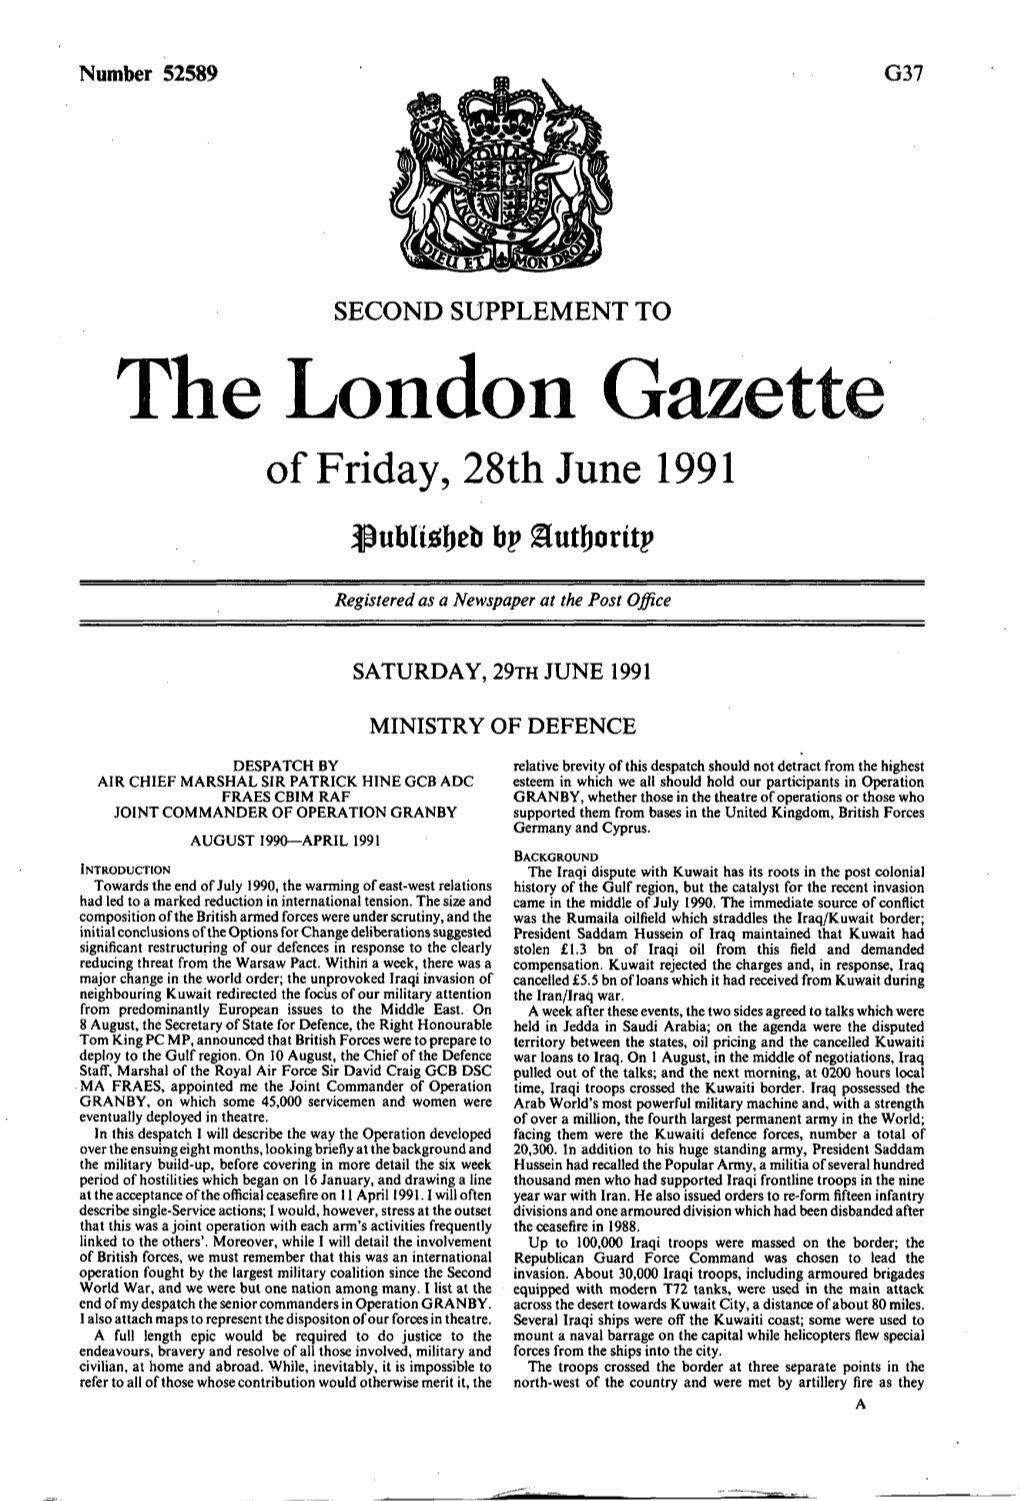 The London Gazette of Friday, 28Th June 1991 Bp Gluthorttp